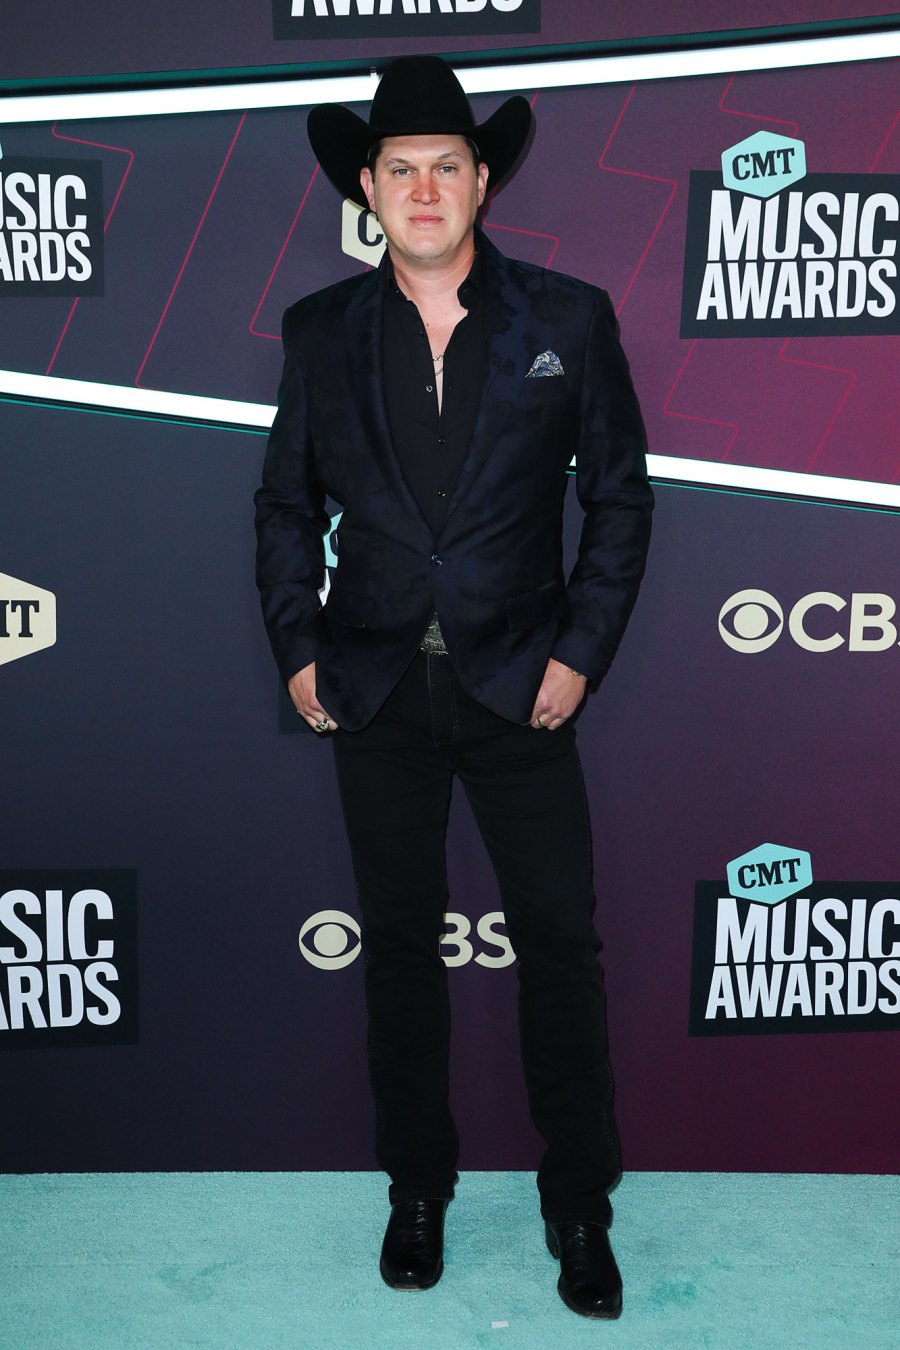 CMT Music Awards 2023 - Red Carpet - 610 Jon Pardi